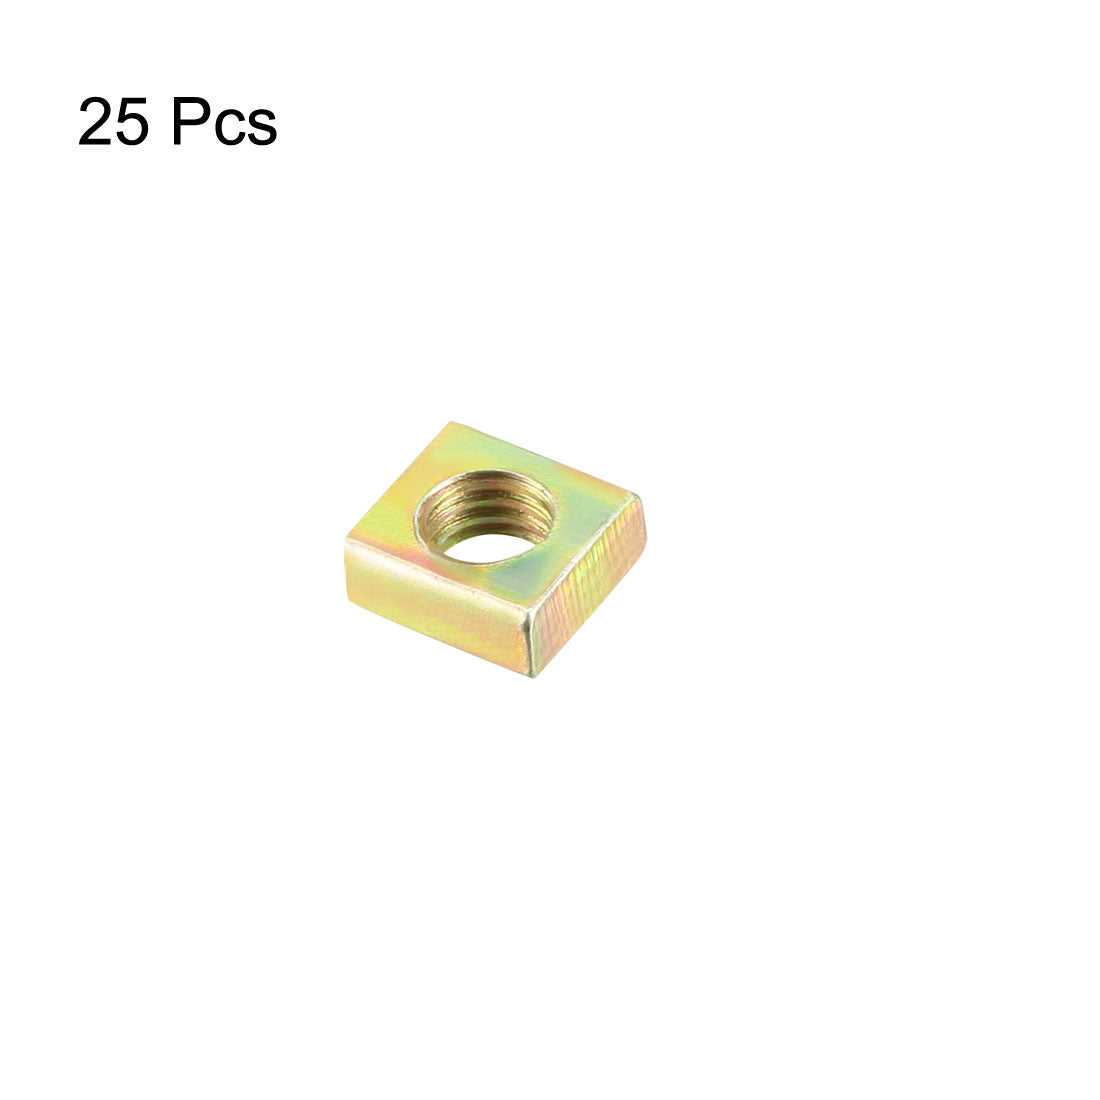 uxcell Uxcell Square Nuts, M5x8mmx3mm Yellow Zinc Plated Metric Coarse Thread Assortment Kit, 25 Pcs